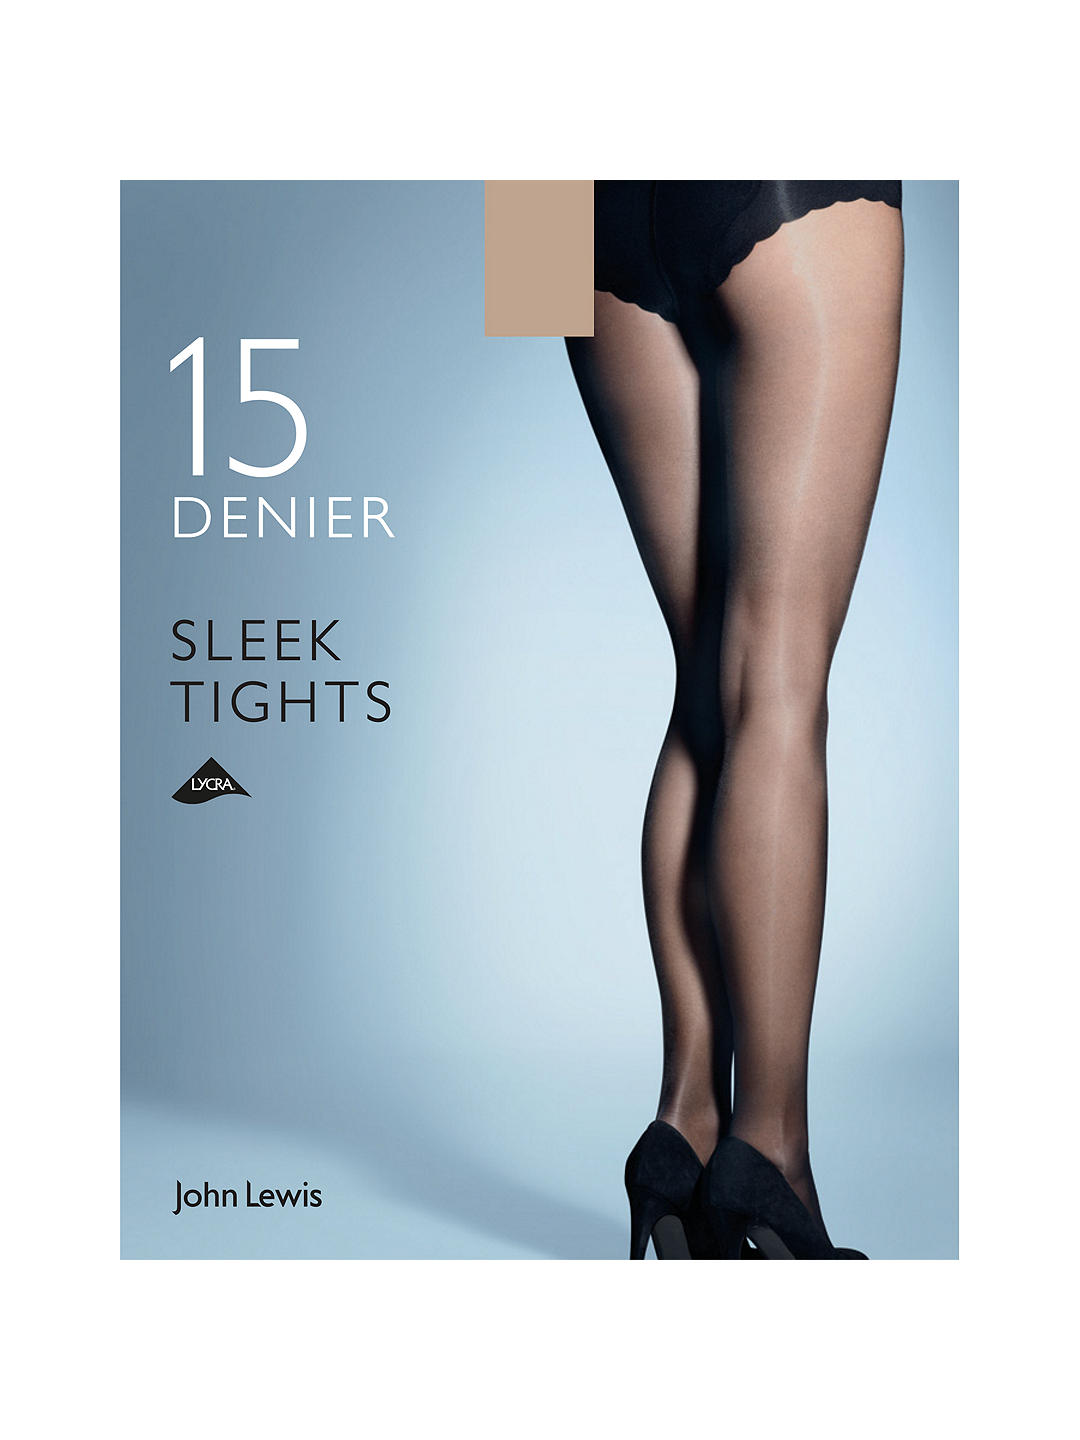 John Lewis 15 Denier Sleek Tights, Pack of 1, Natural Tan